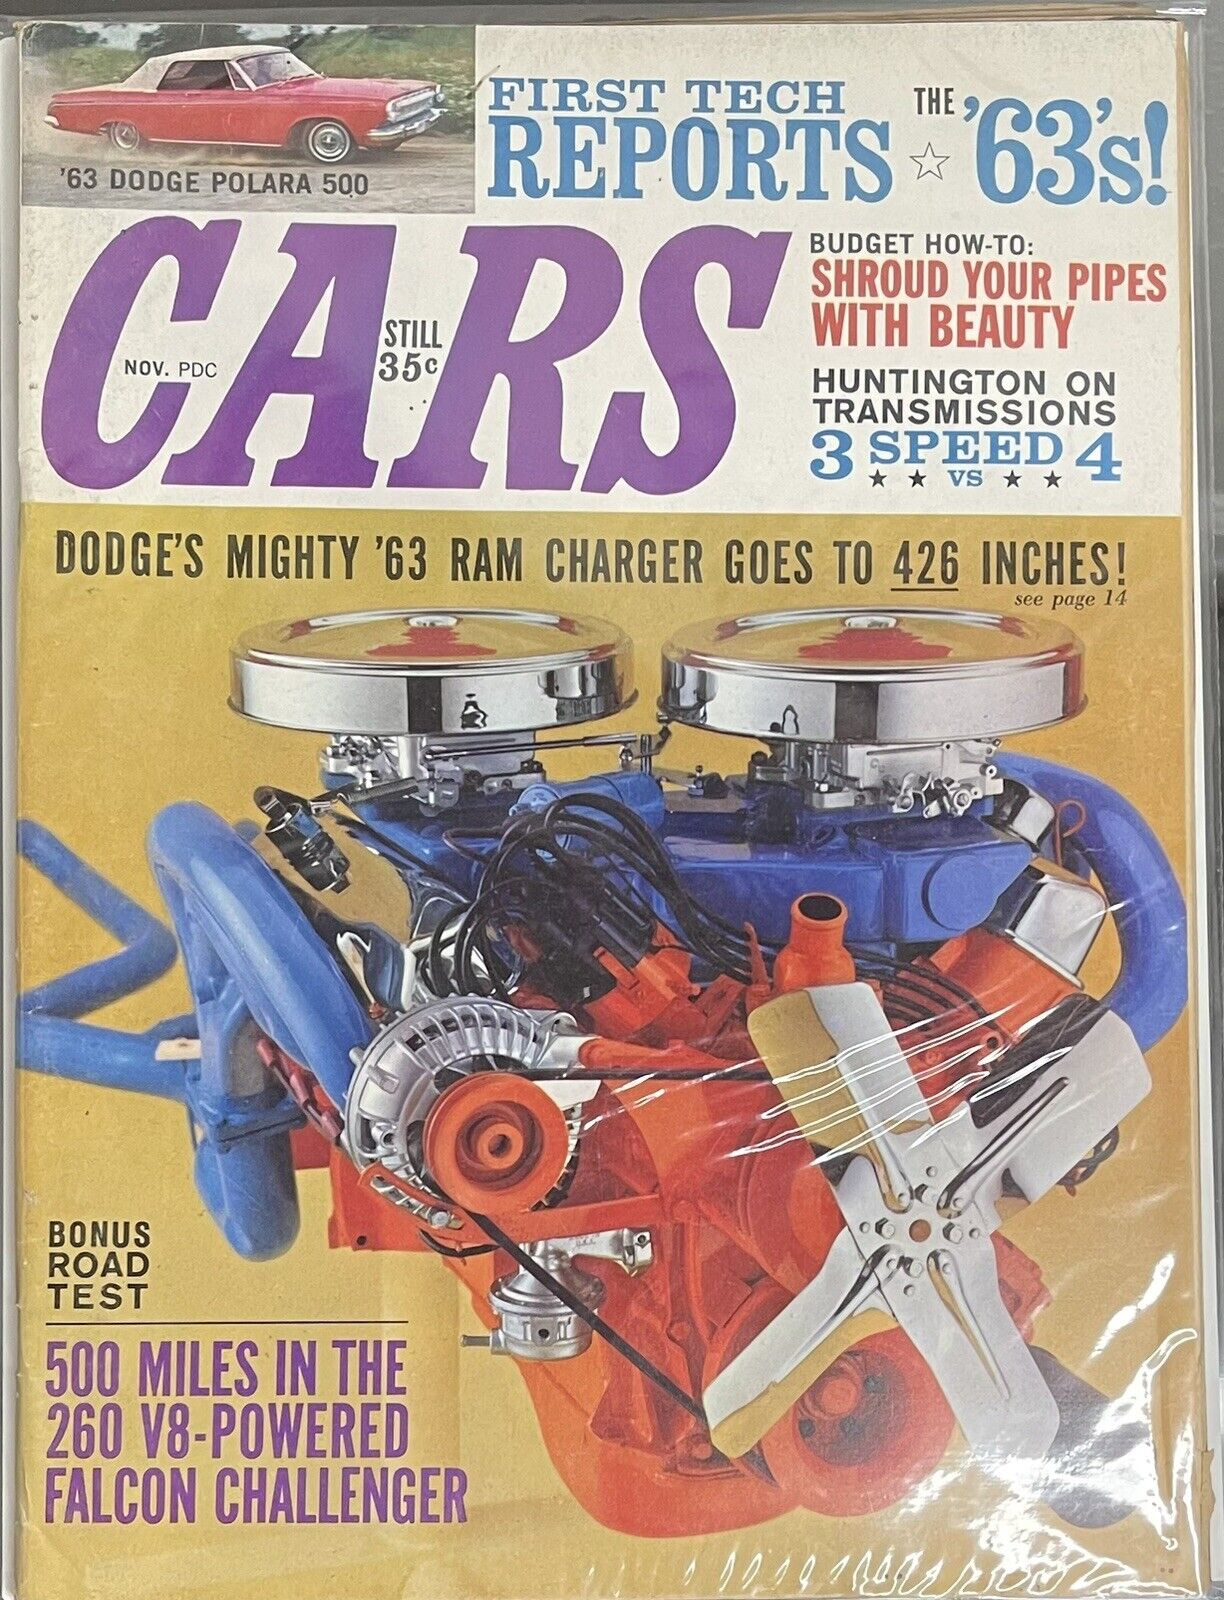 Cars Magazine November 1962